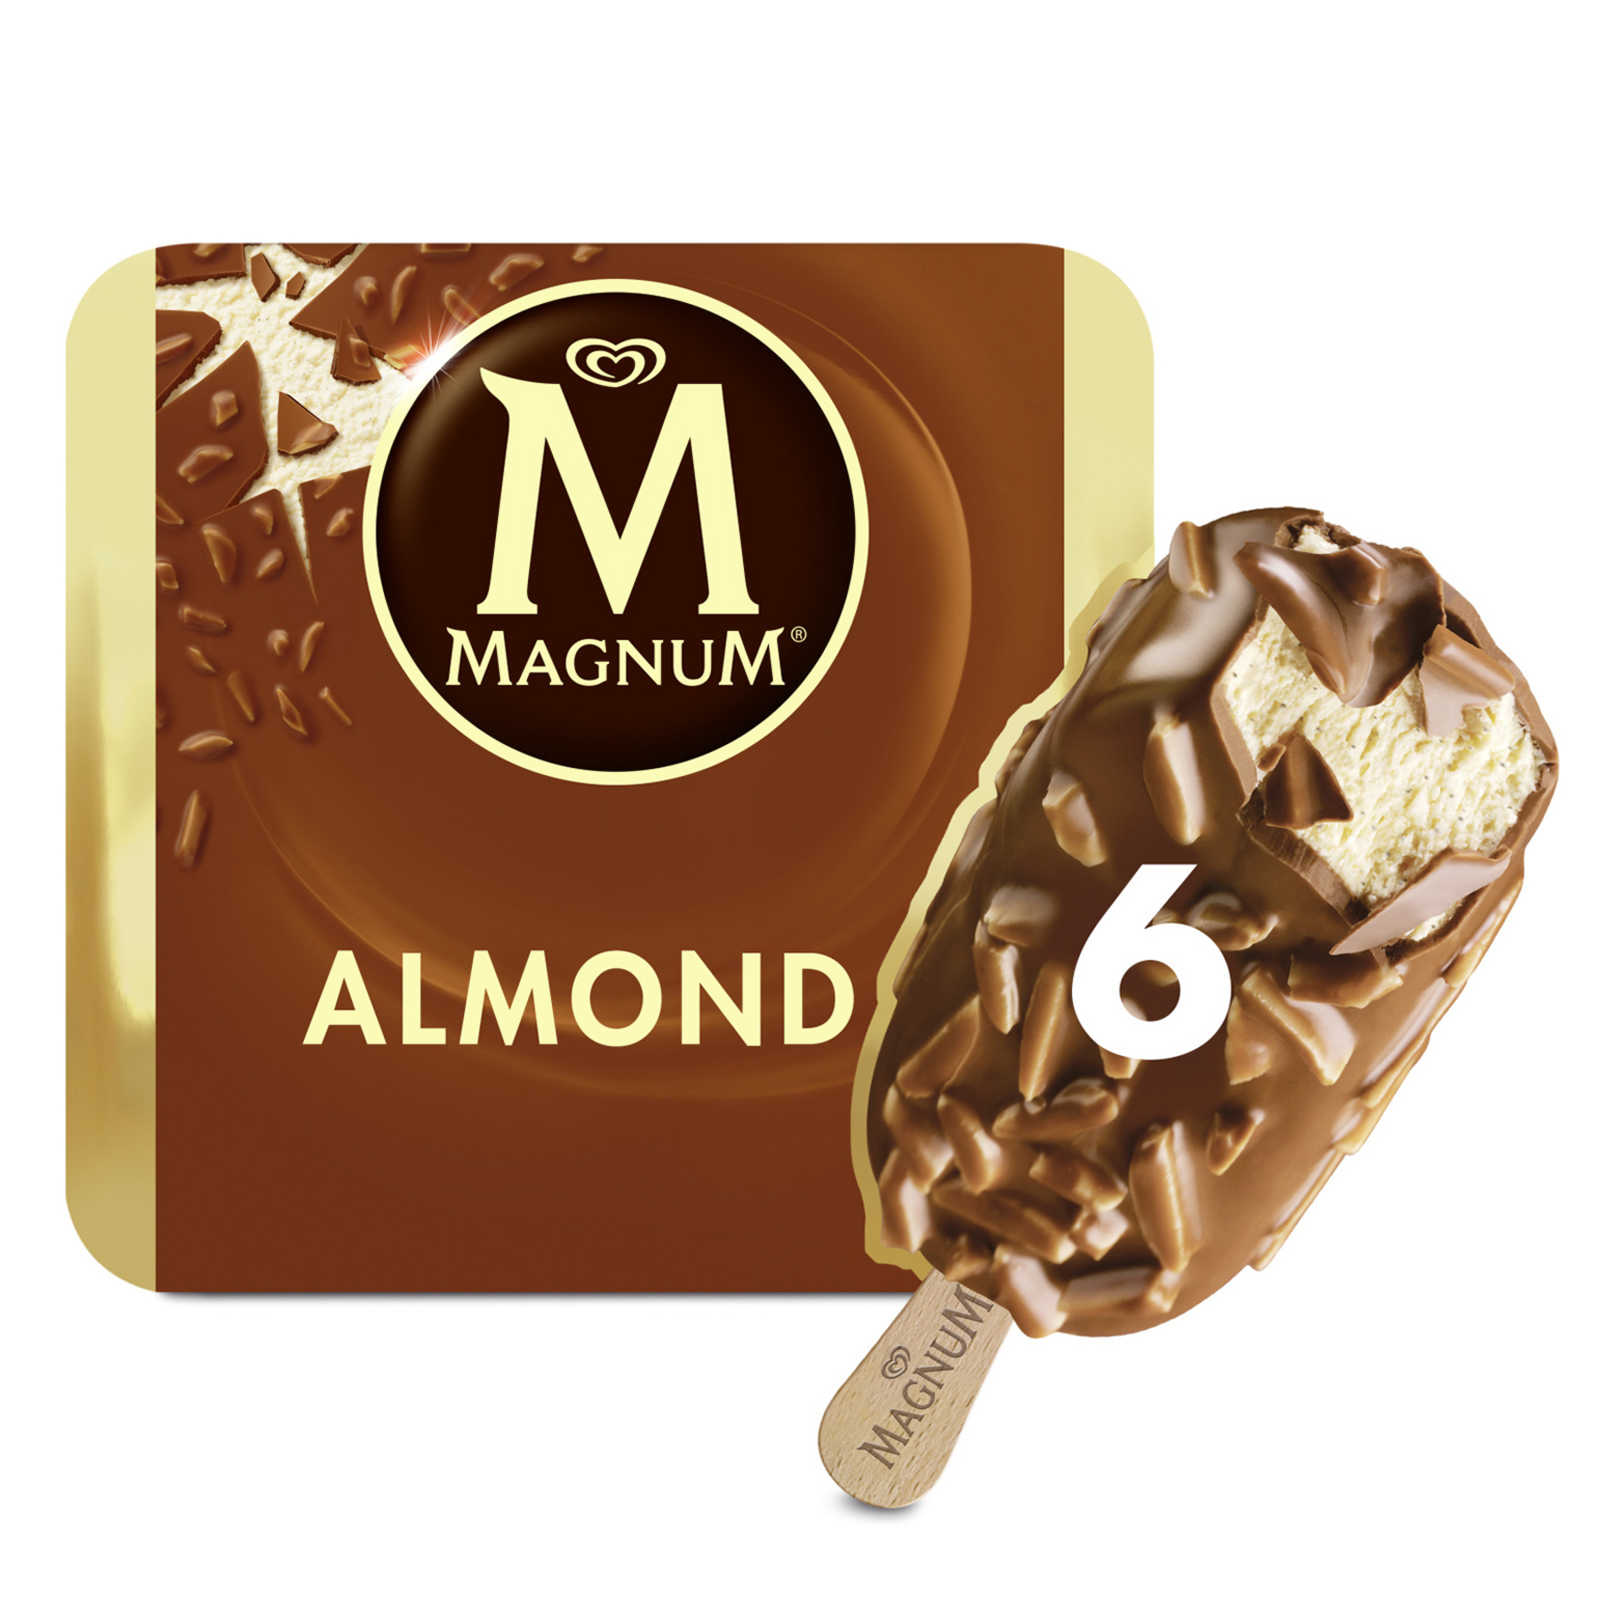 Magnum - Almonds (last validated: Oct 2021) - Fight Dual Food